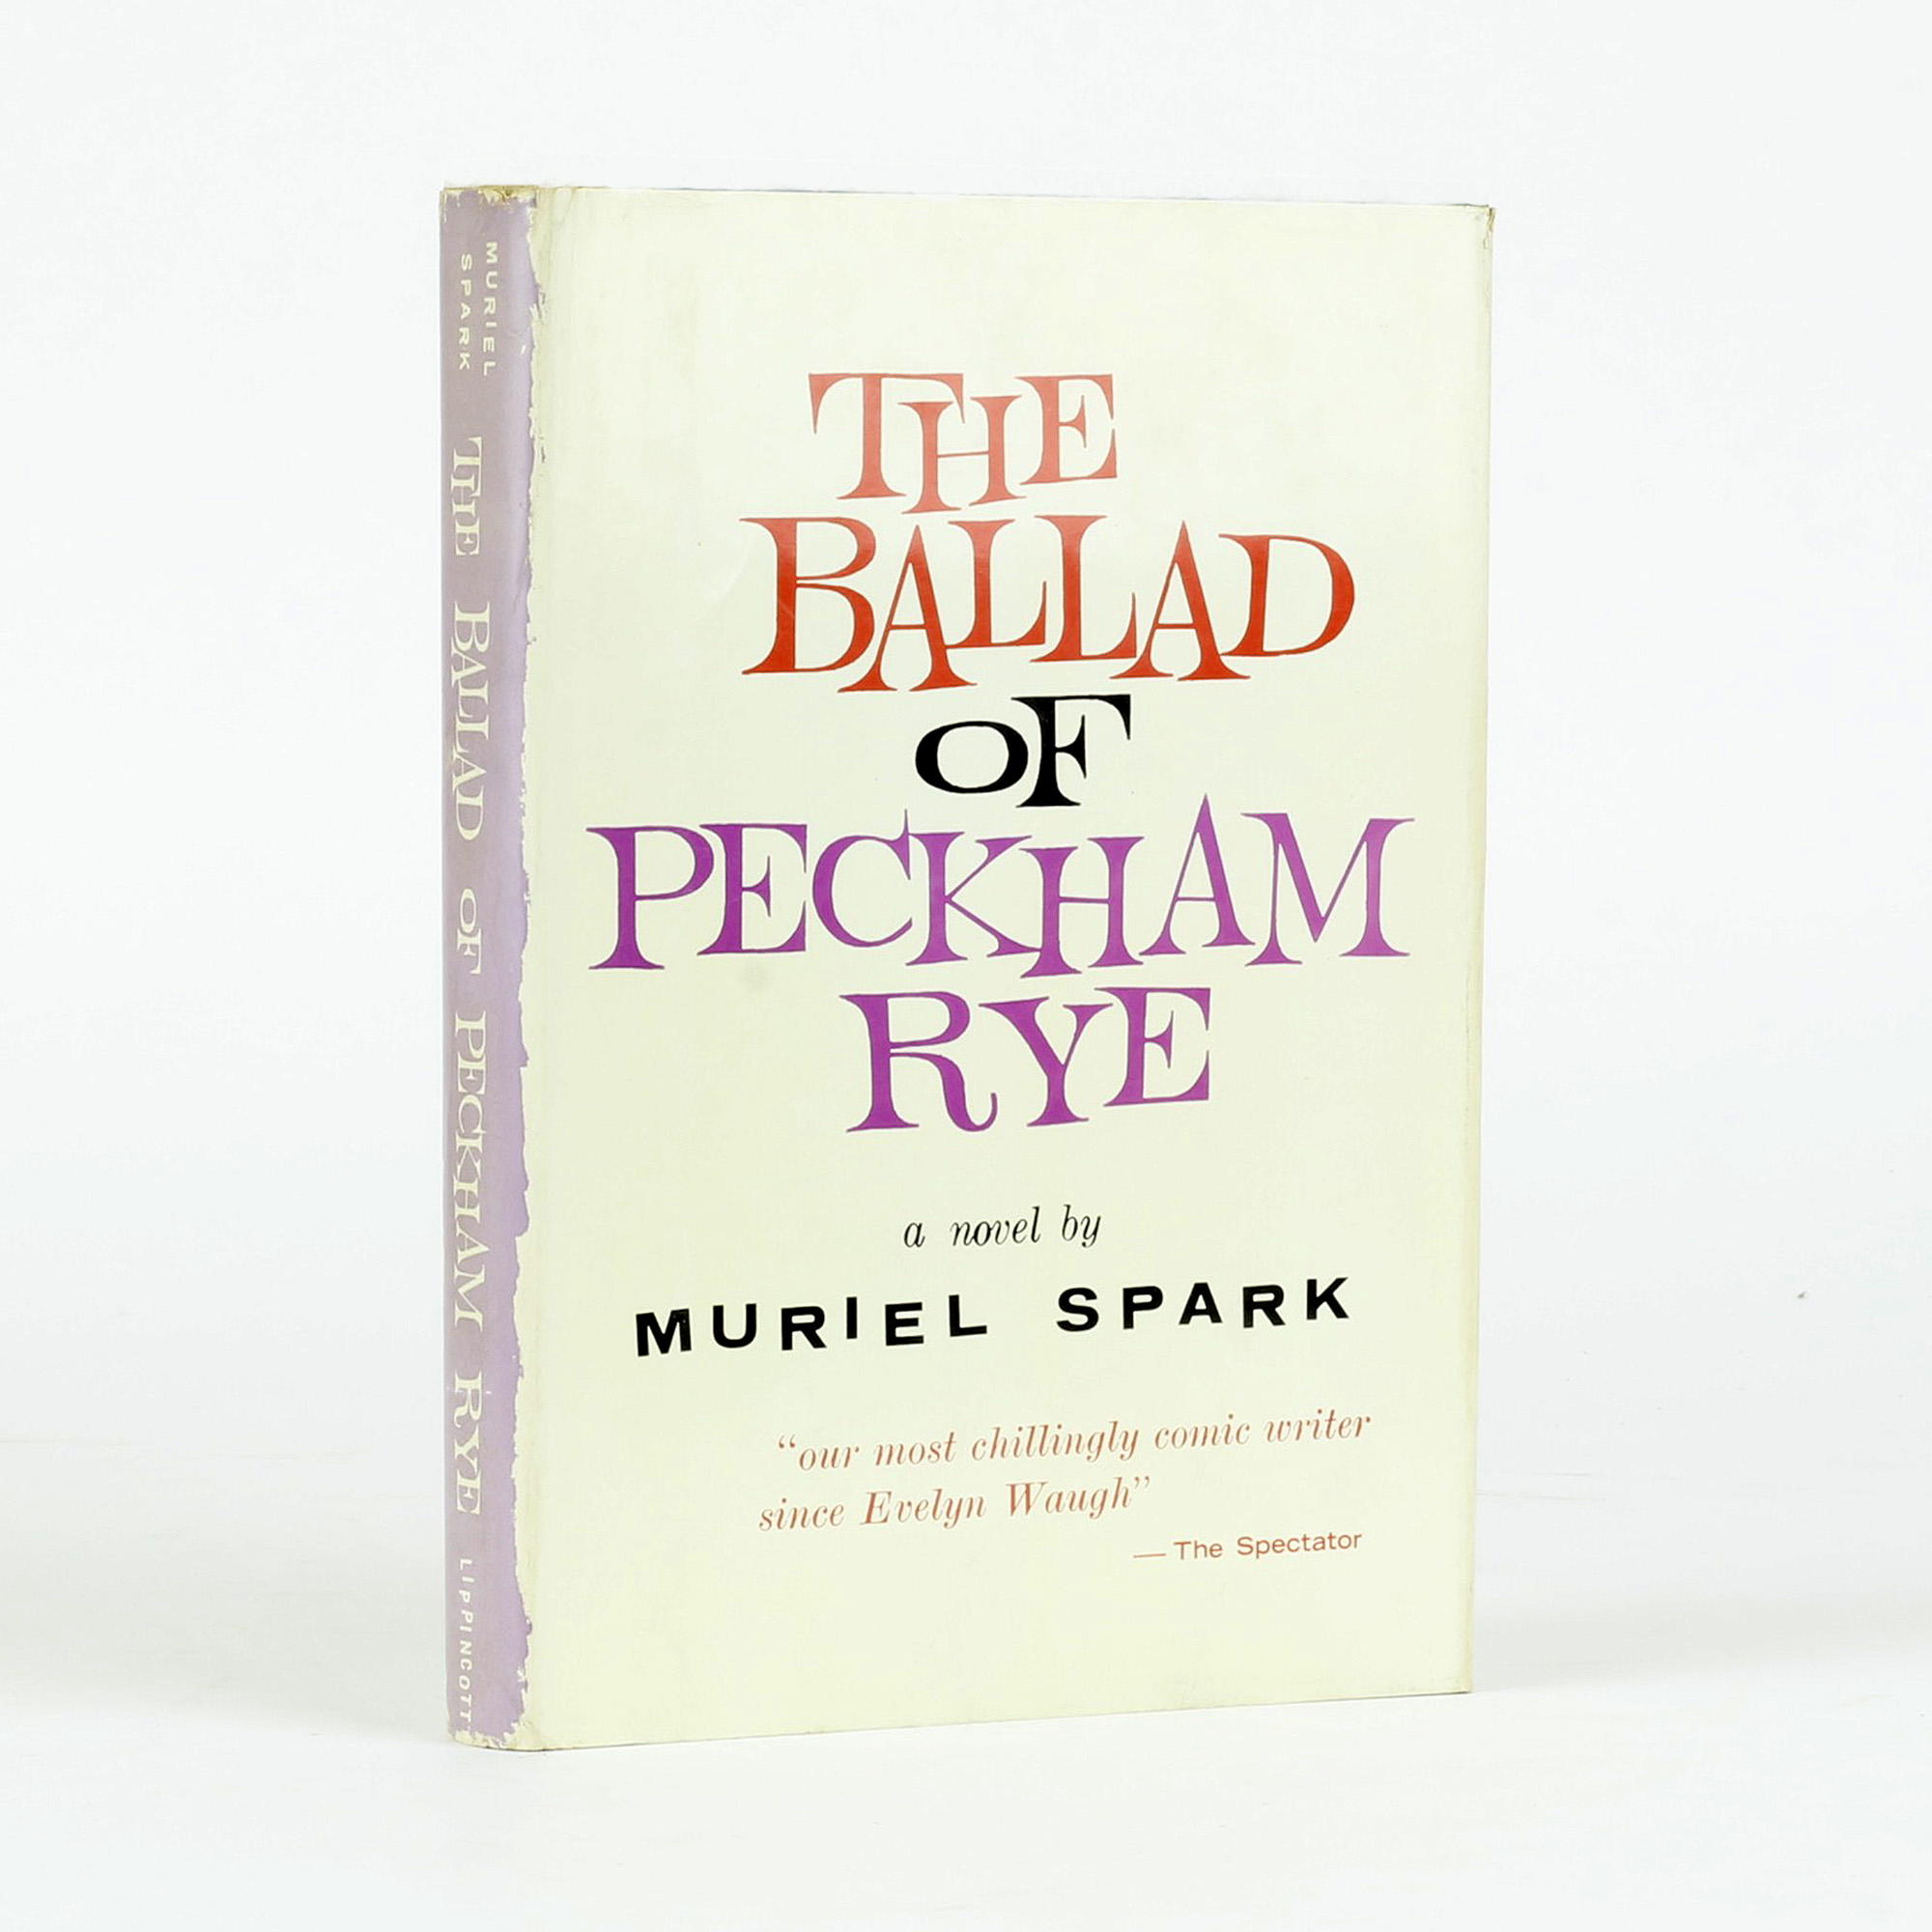 the ballad of peckham rye by muriel spark